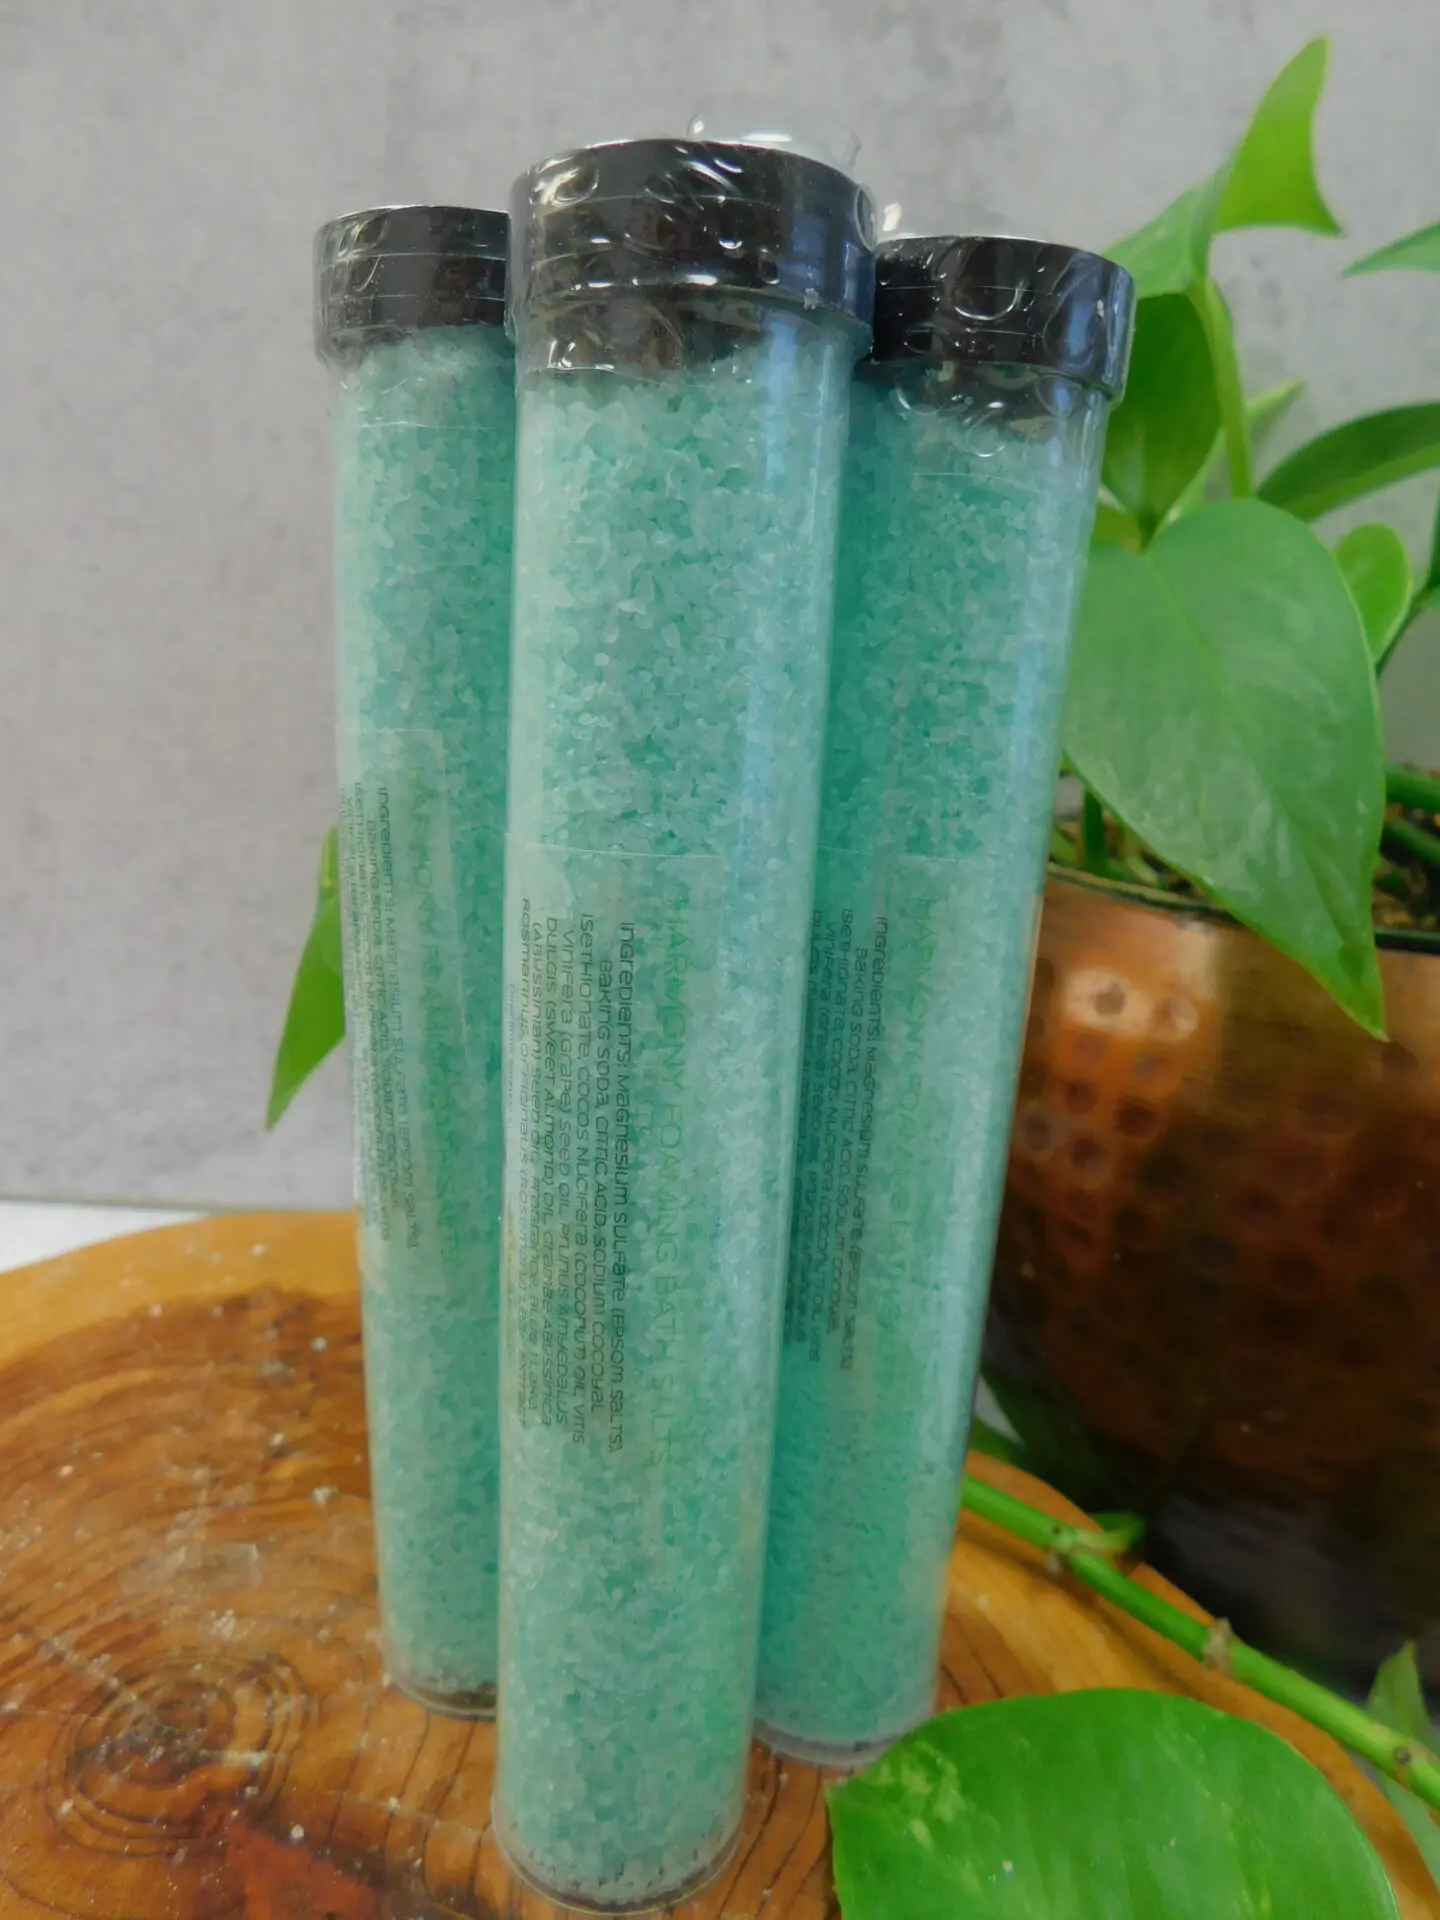 Blue Harmony Bath Salts Plastic Tubes